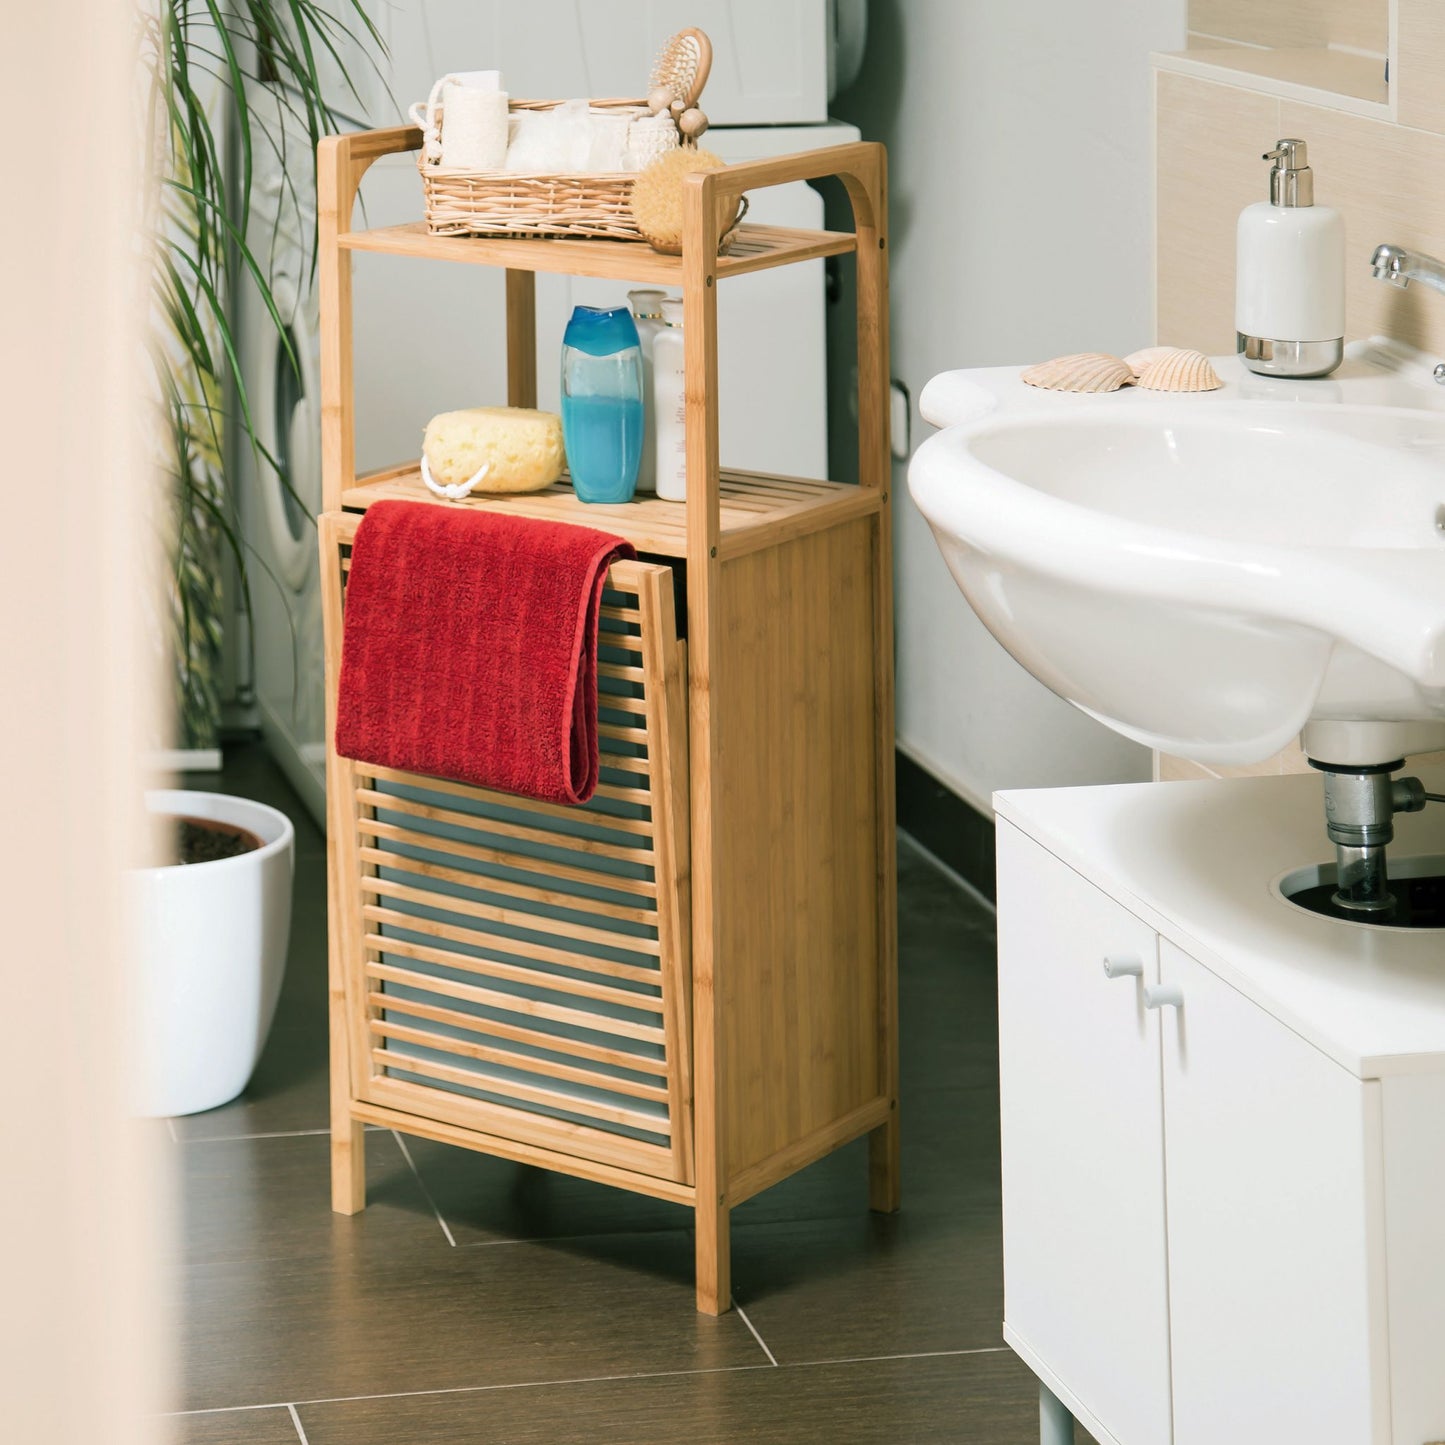 RelaxDays Bamboo laundry hamper with shelf Bamboo Bathrooms